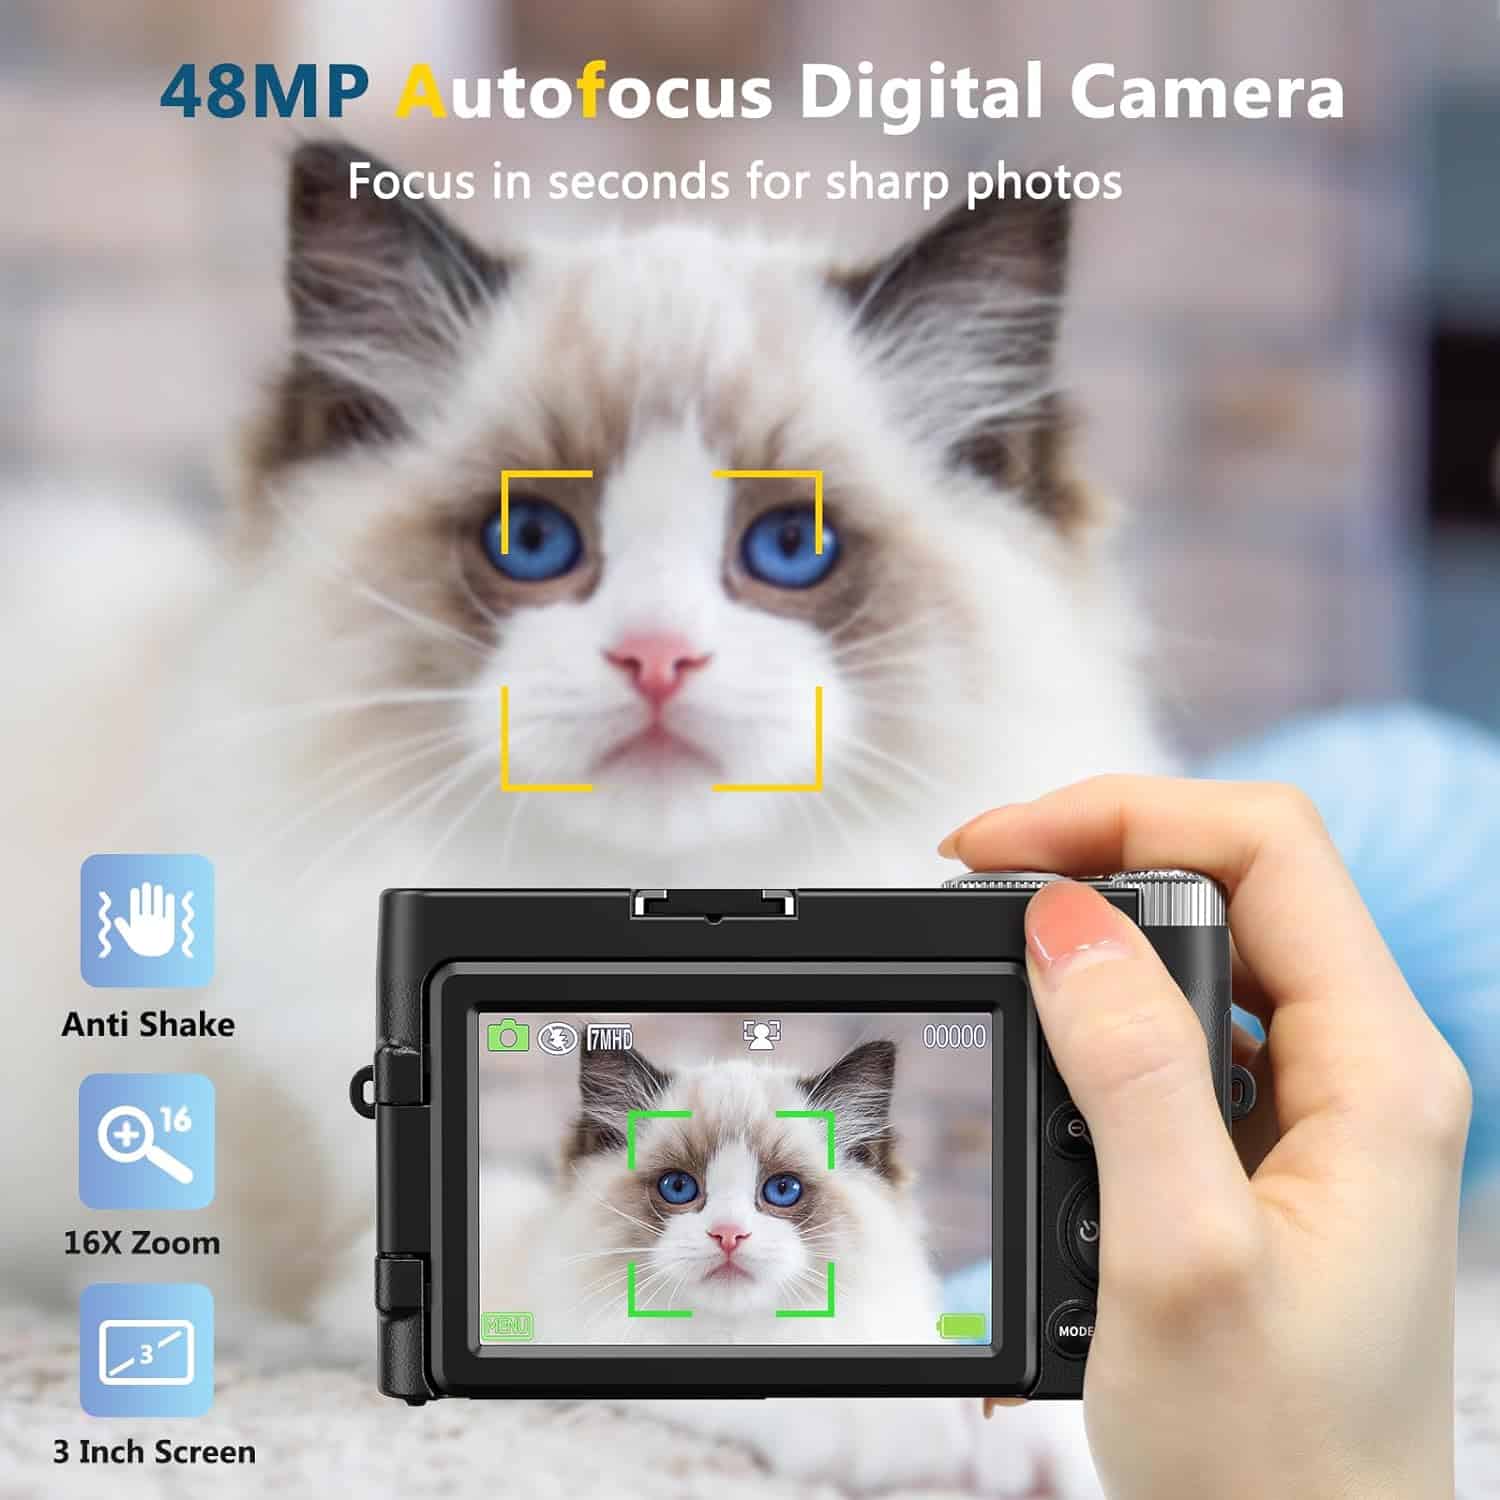 Capture Your Memories in Stunning 4K - A Review of the Bifevsr 4K Digital Camera